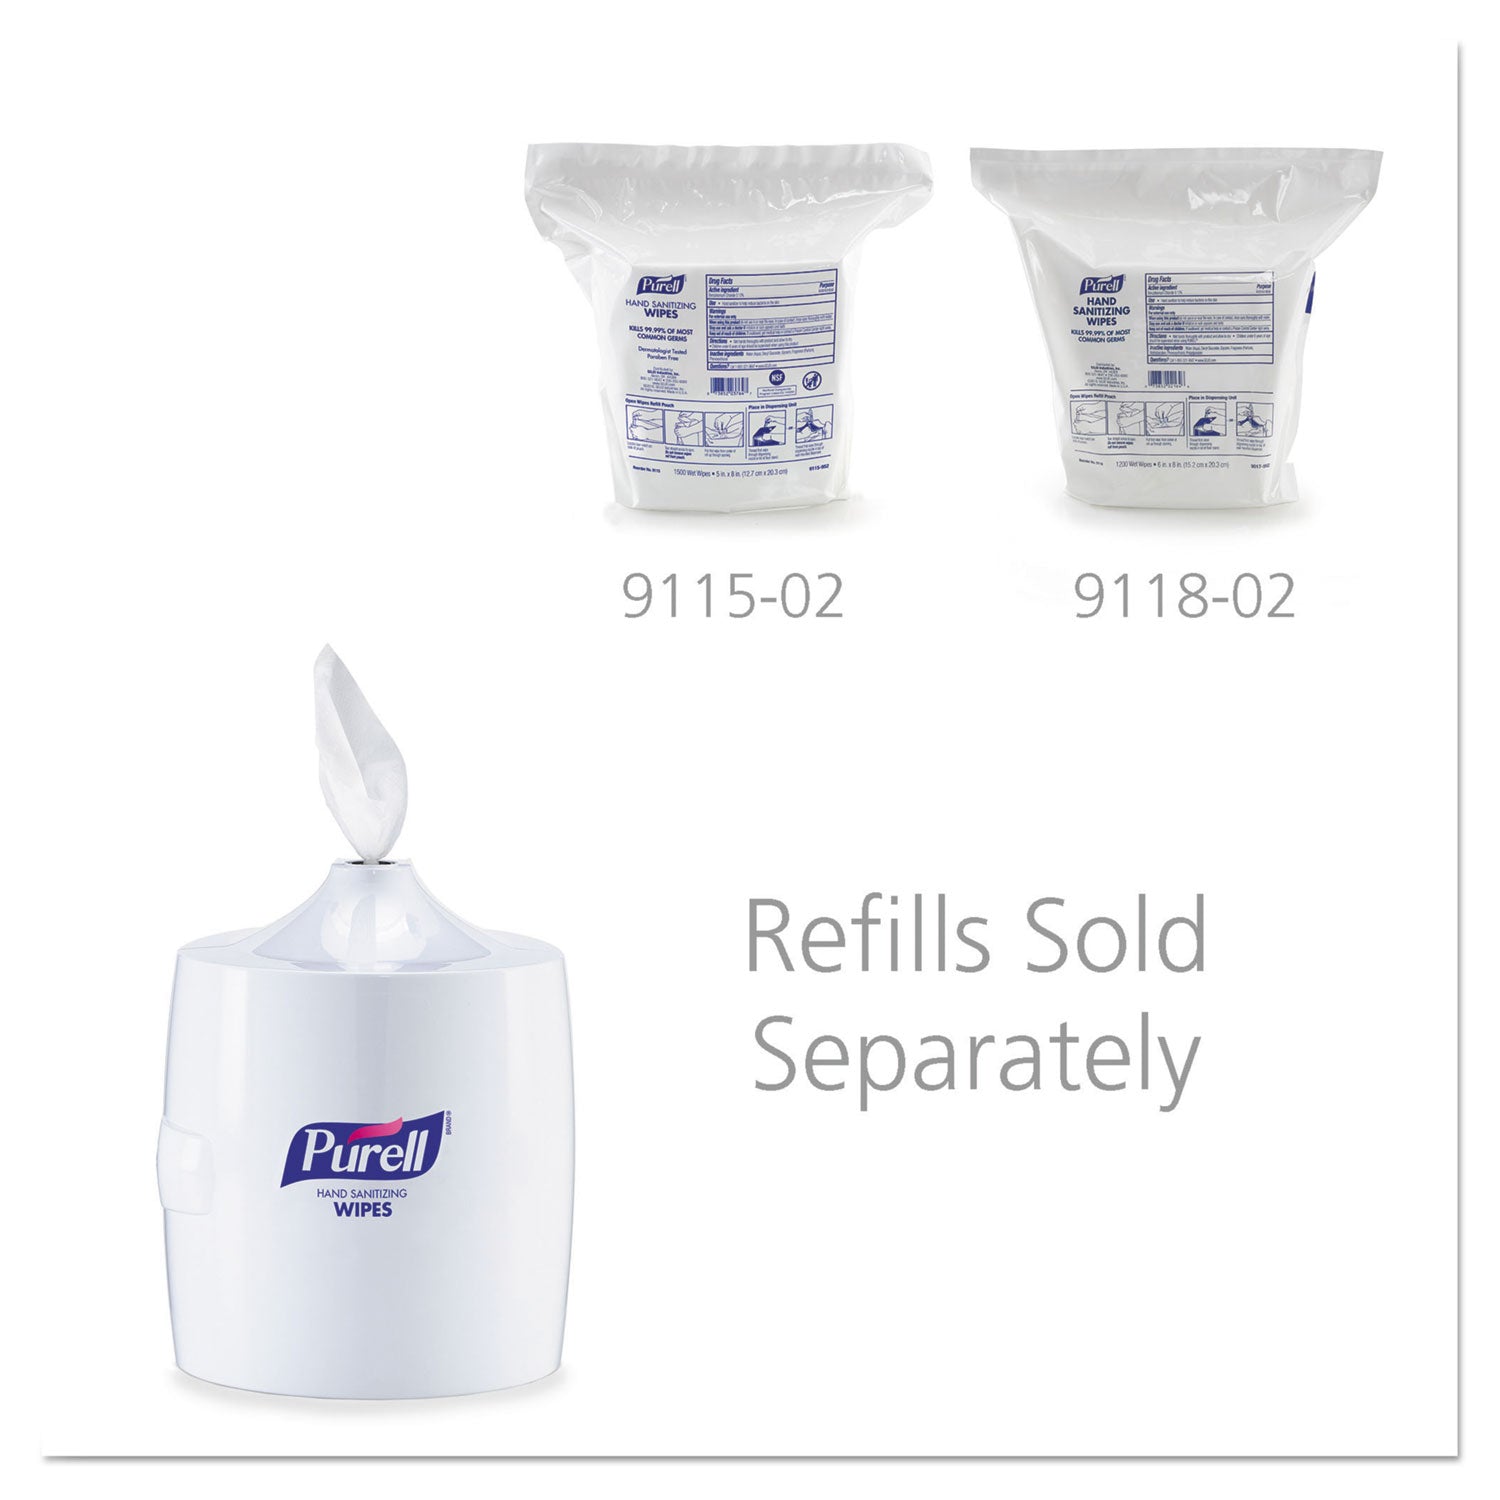 Hand Sanitizer Wipes Wall Mount Dispenser, 1,200/1,500 Wipe Capacity, 13.3 x 11 x 10.88, White - 